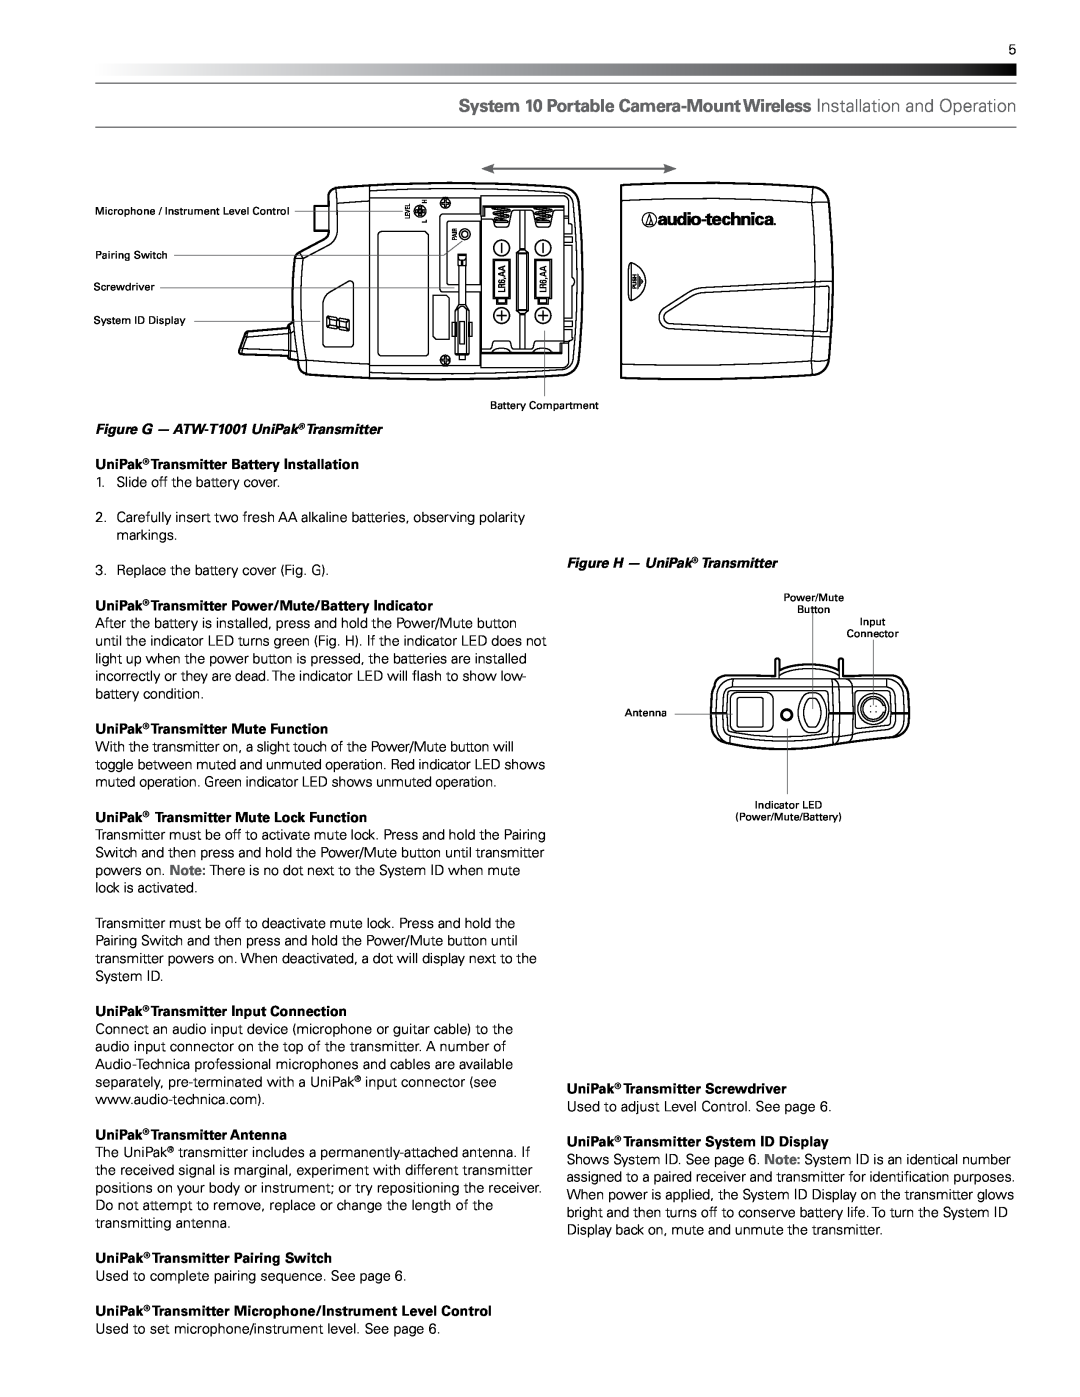 Audio-Technica atw1702, atw-1701 manual Figure G - ATW-T1001UniPak Transmitter, UniPak Transmitter Battery Installation 